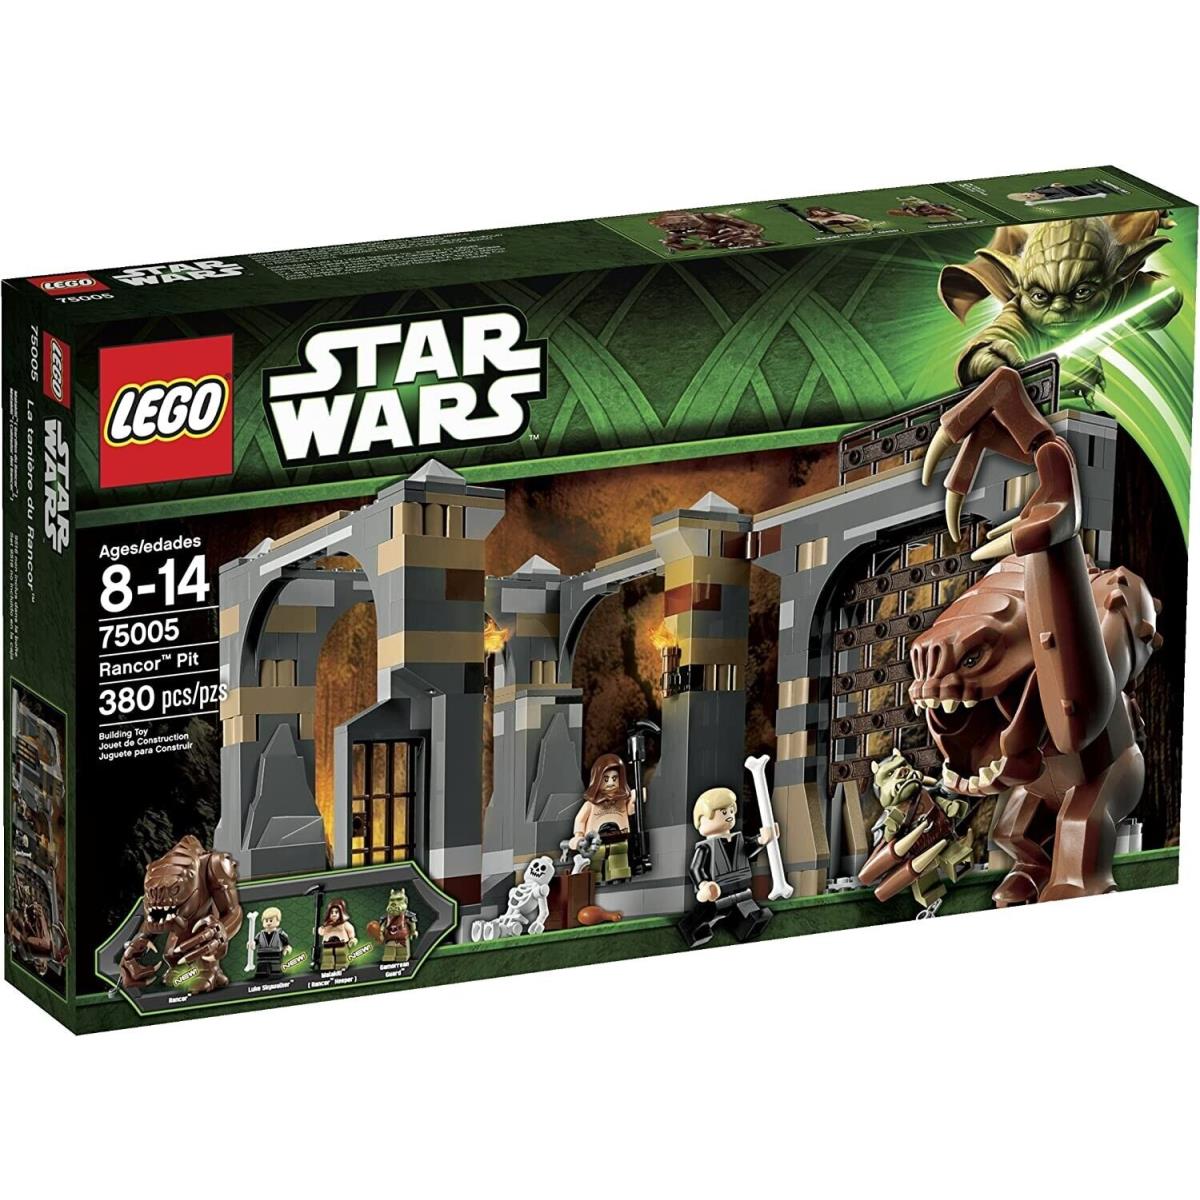 Lego Star Wars 75005: Rancor Pit Retired Hard to Find Building Set